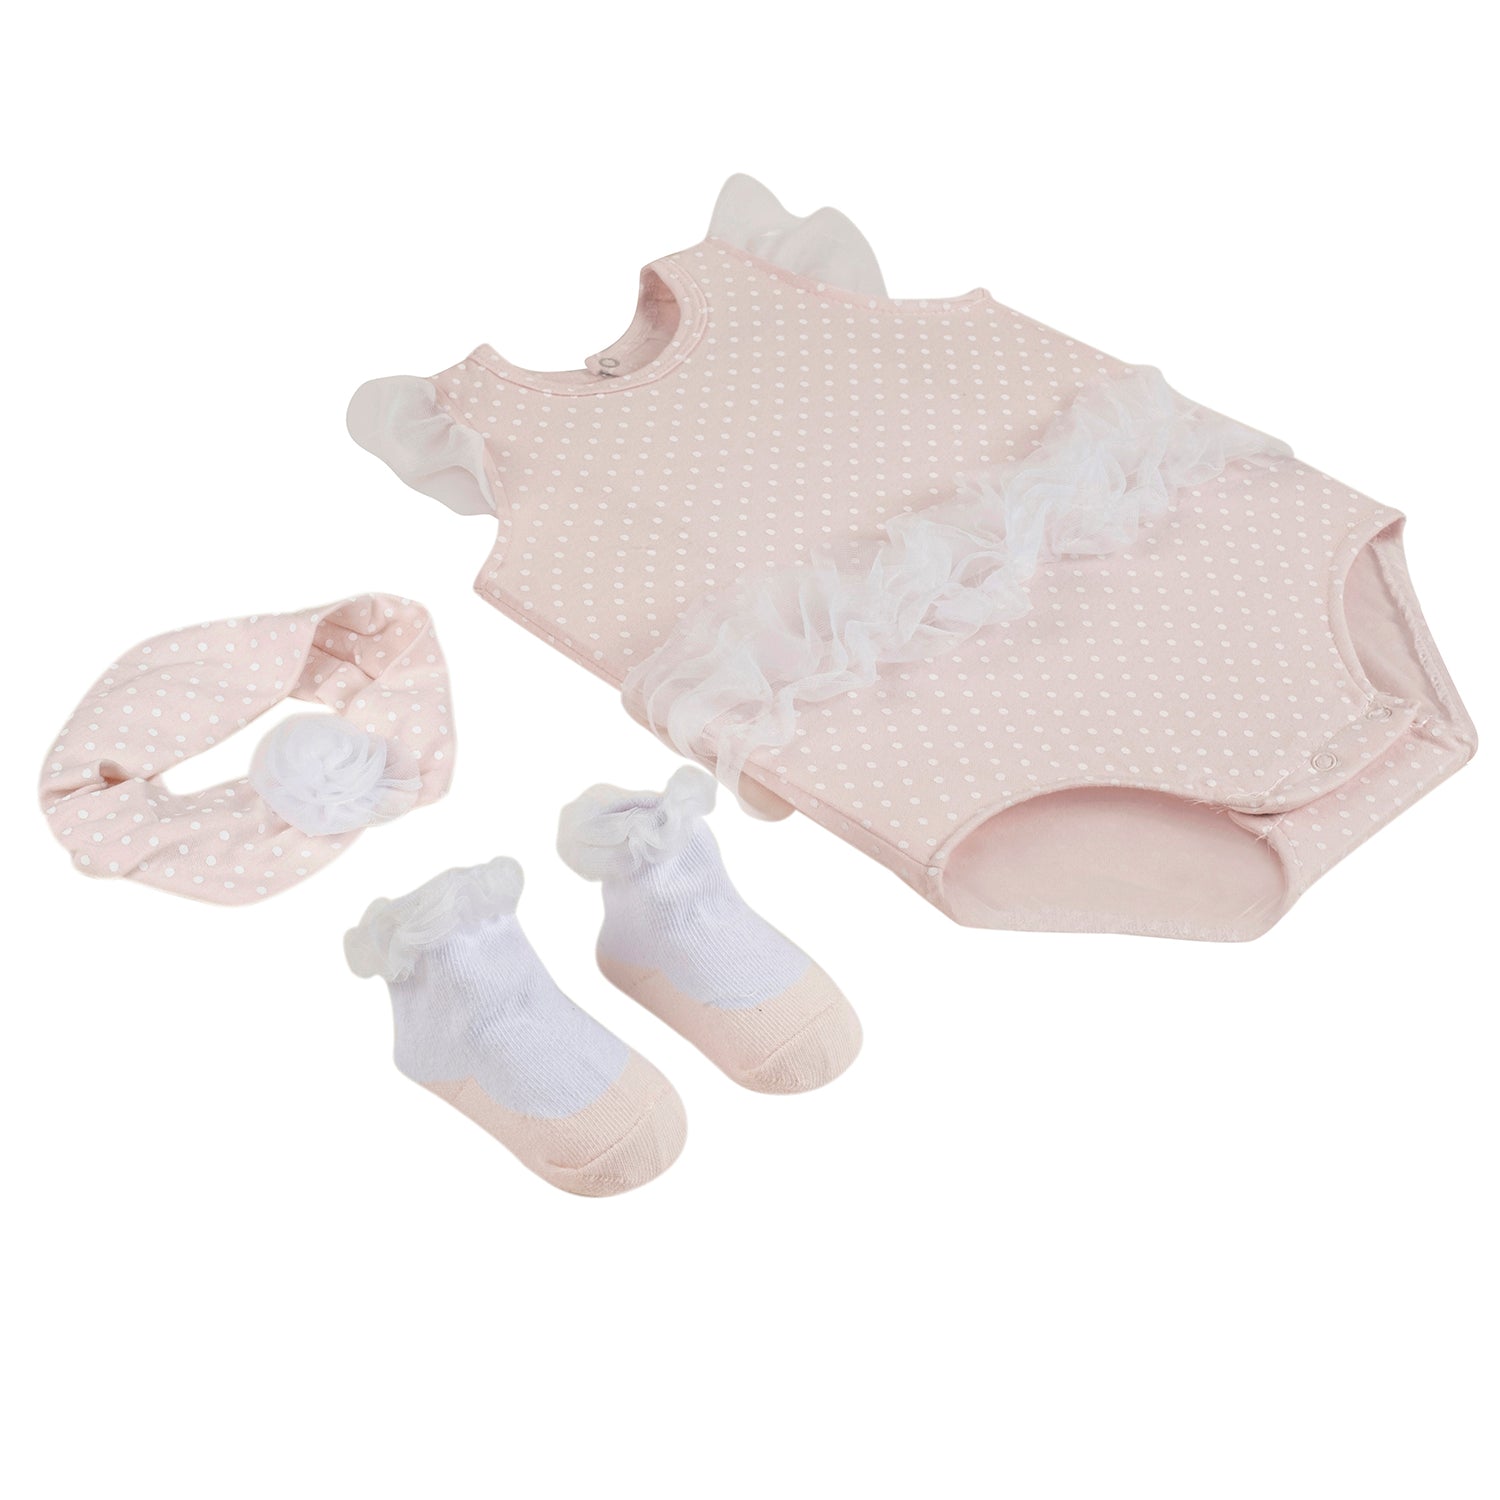 Baby Moo Polka Dotte Gift Set 3 Piece With Bodysuit, Socks And Headband - Cream